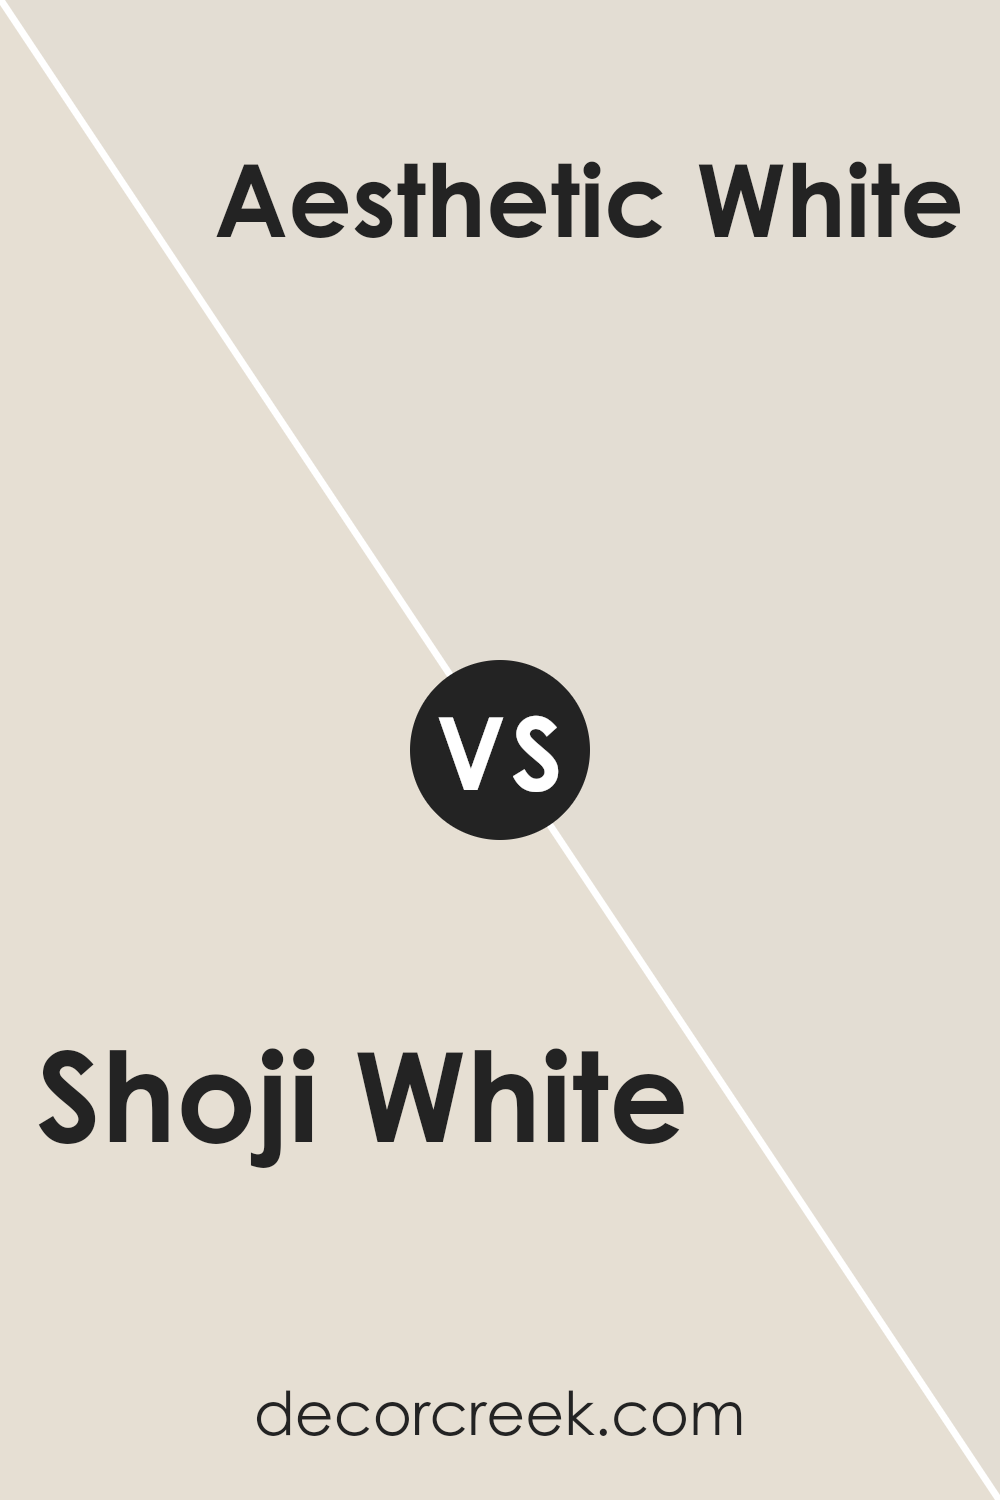 shoji_white_sw_7042_vs_aesthetic_white_sw_7035